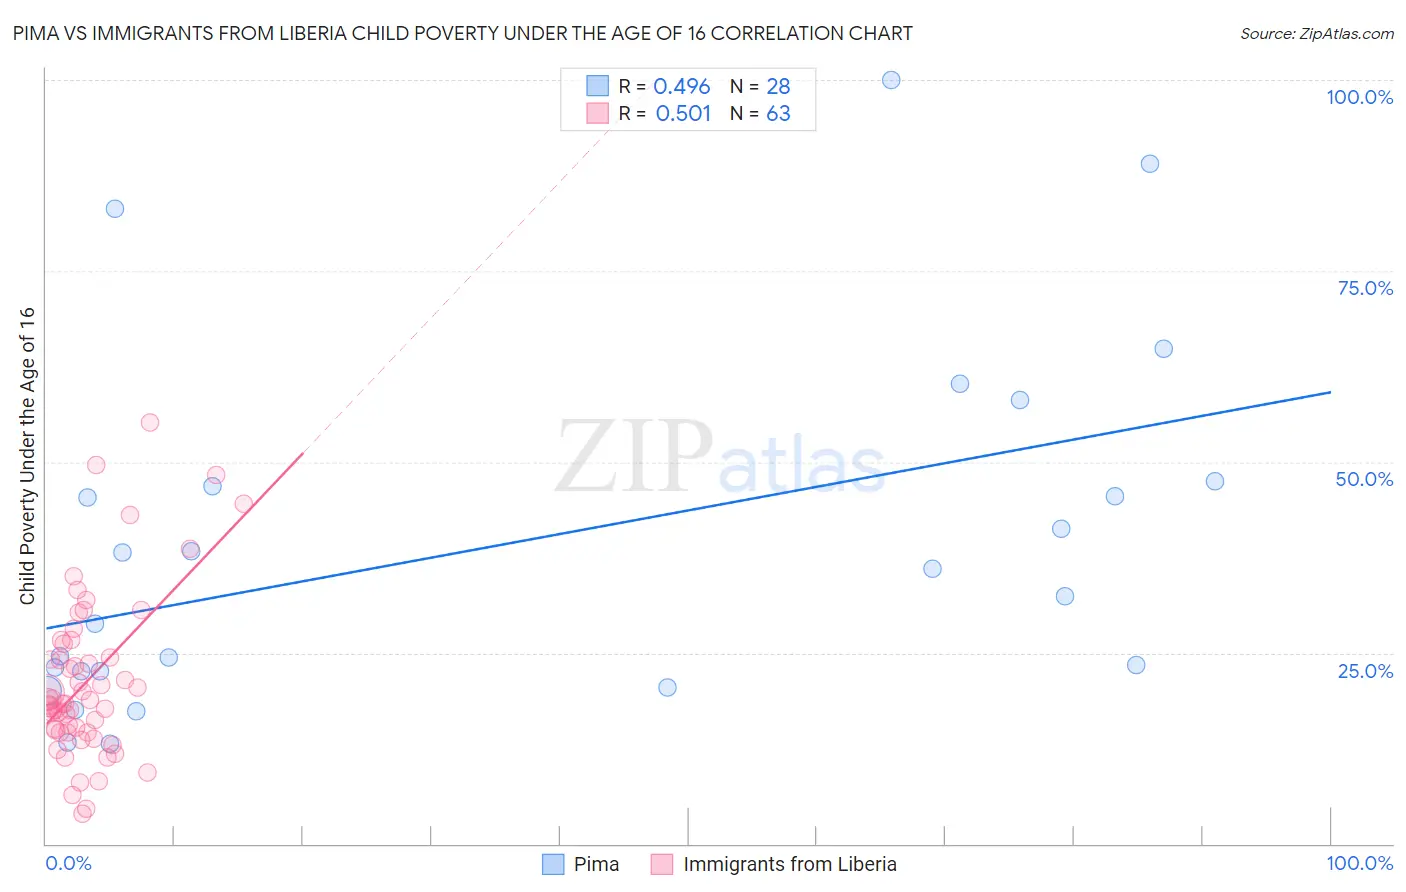 Pima vs Immigrants from Liberia Child Poverty Under the Age of 16